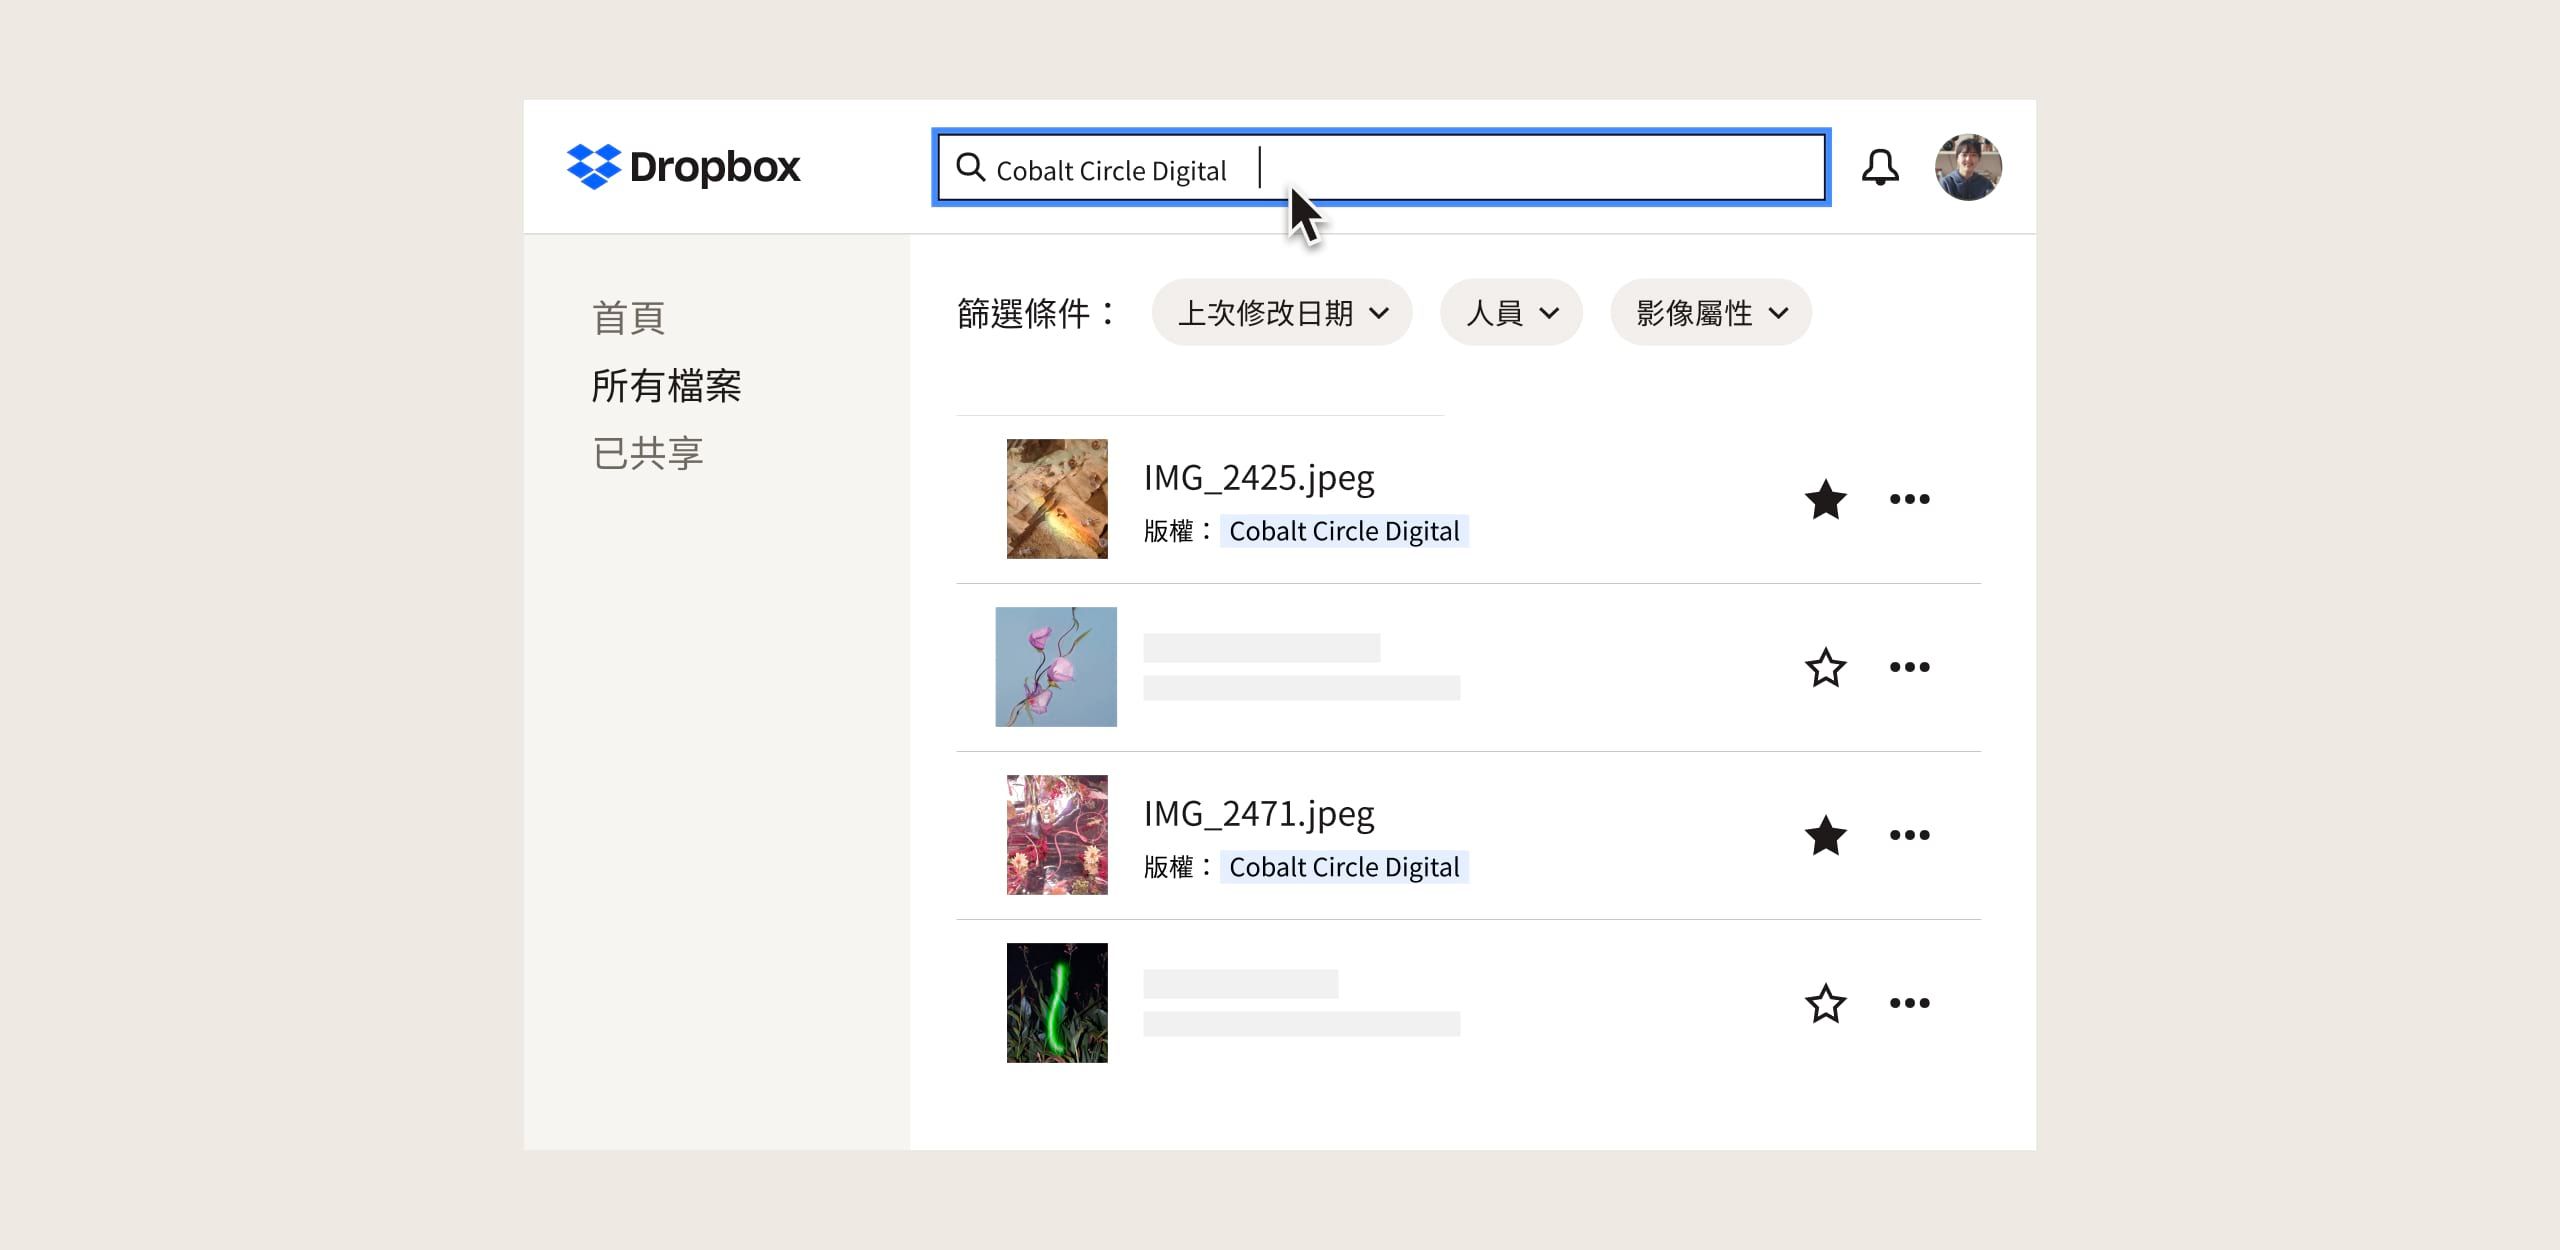 Dropbox 介面中具有版權圖片的搜尋結果頁面